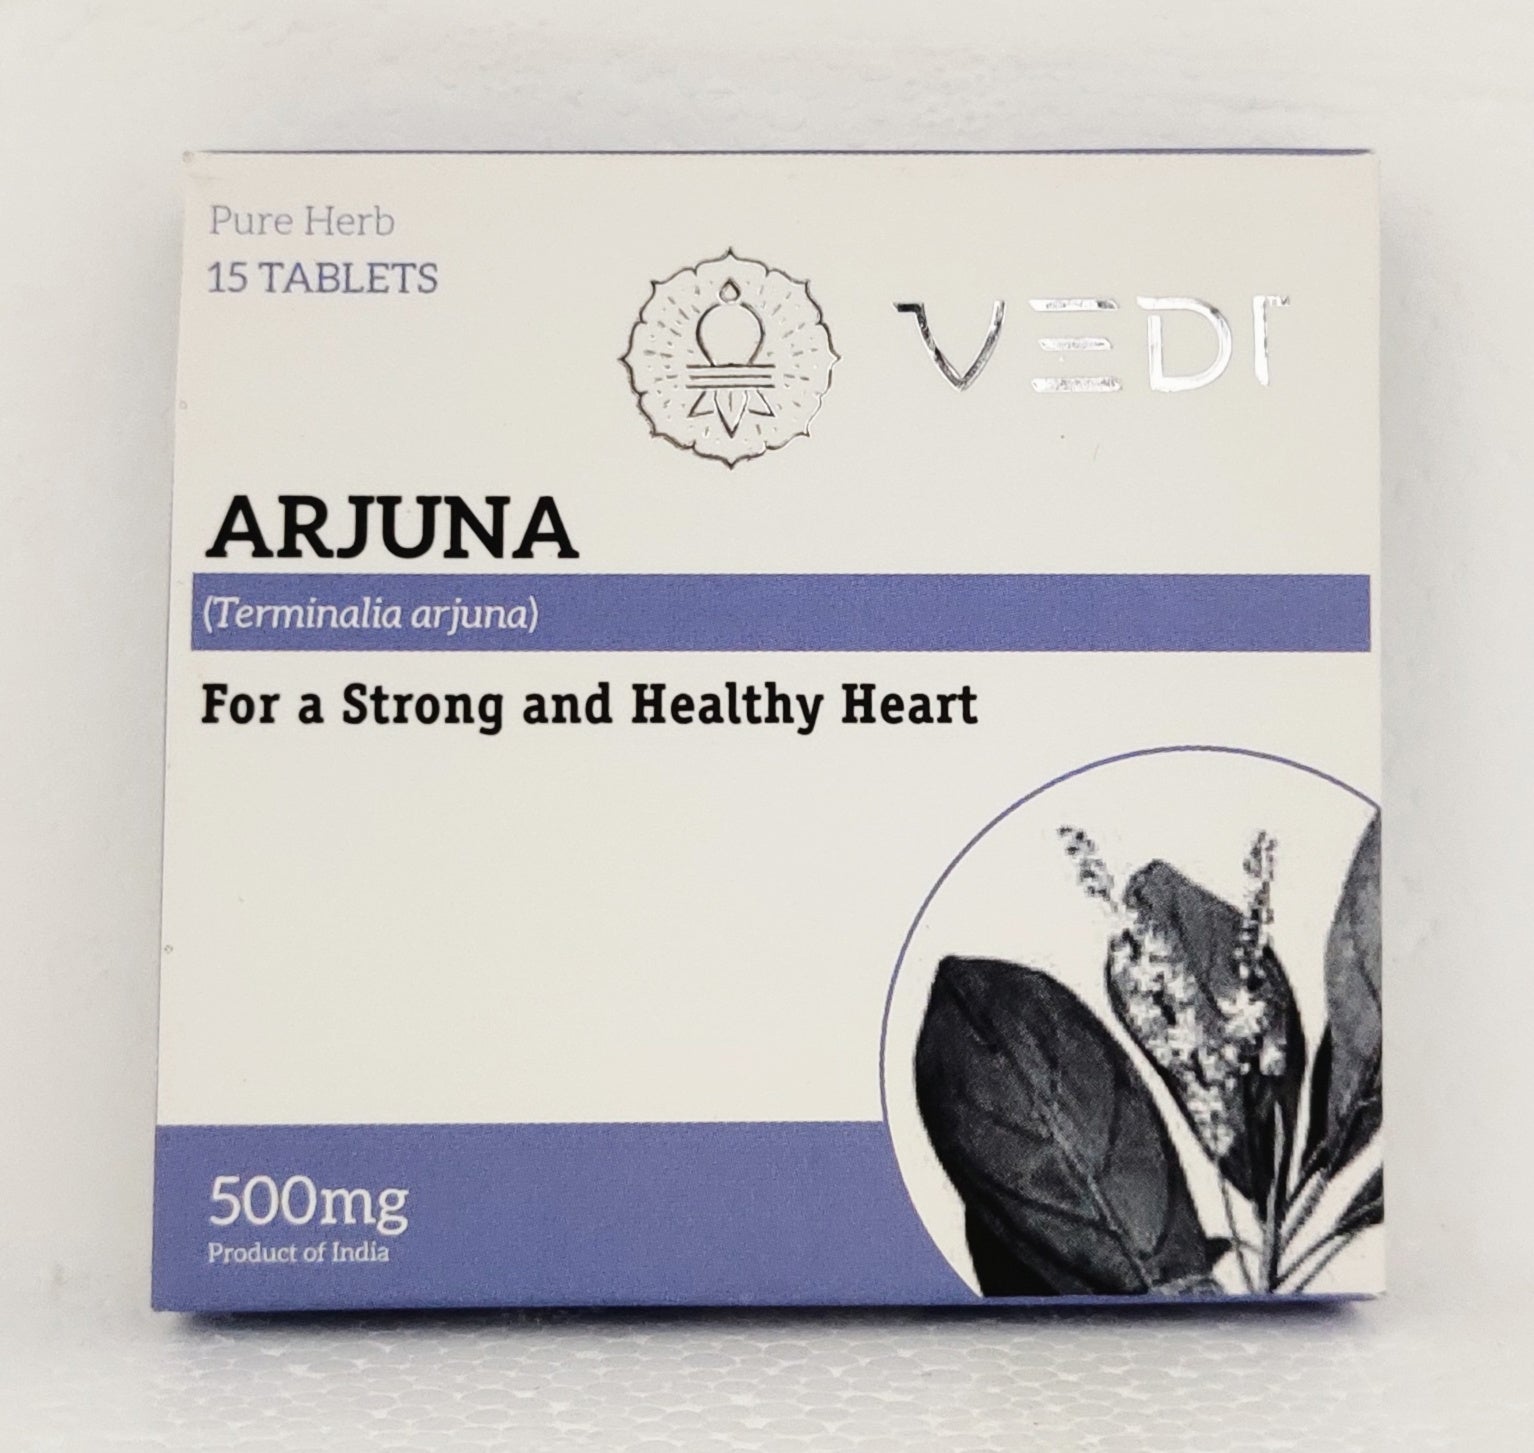 Arjuna tablets - 15tablets -  Vedi Herbals - Medizzo.com